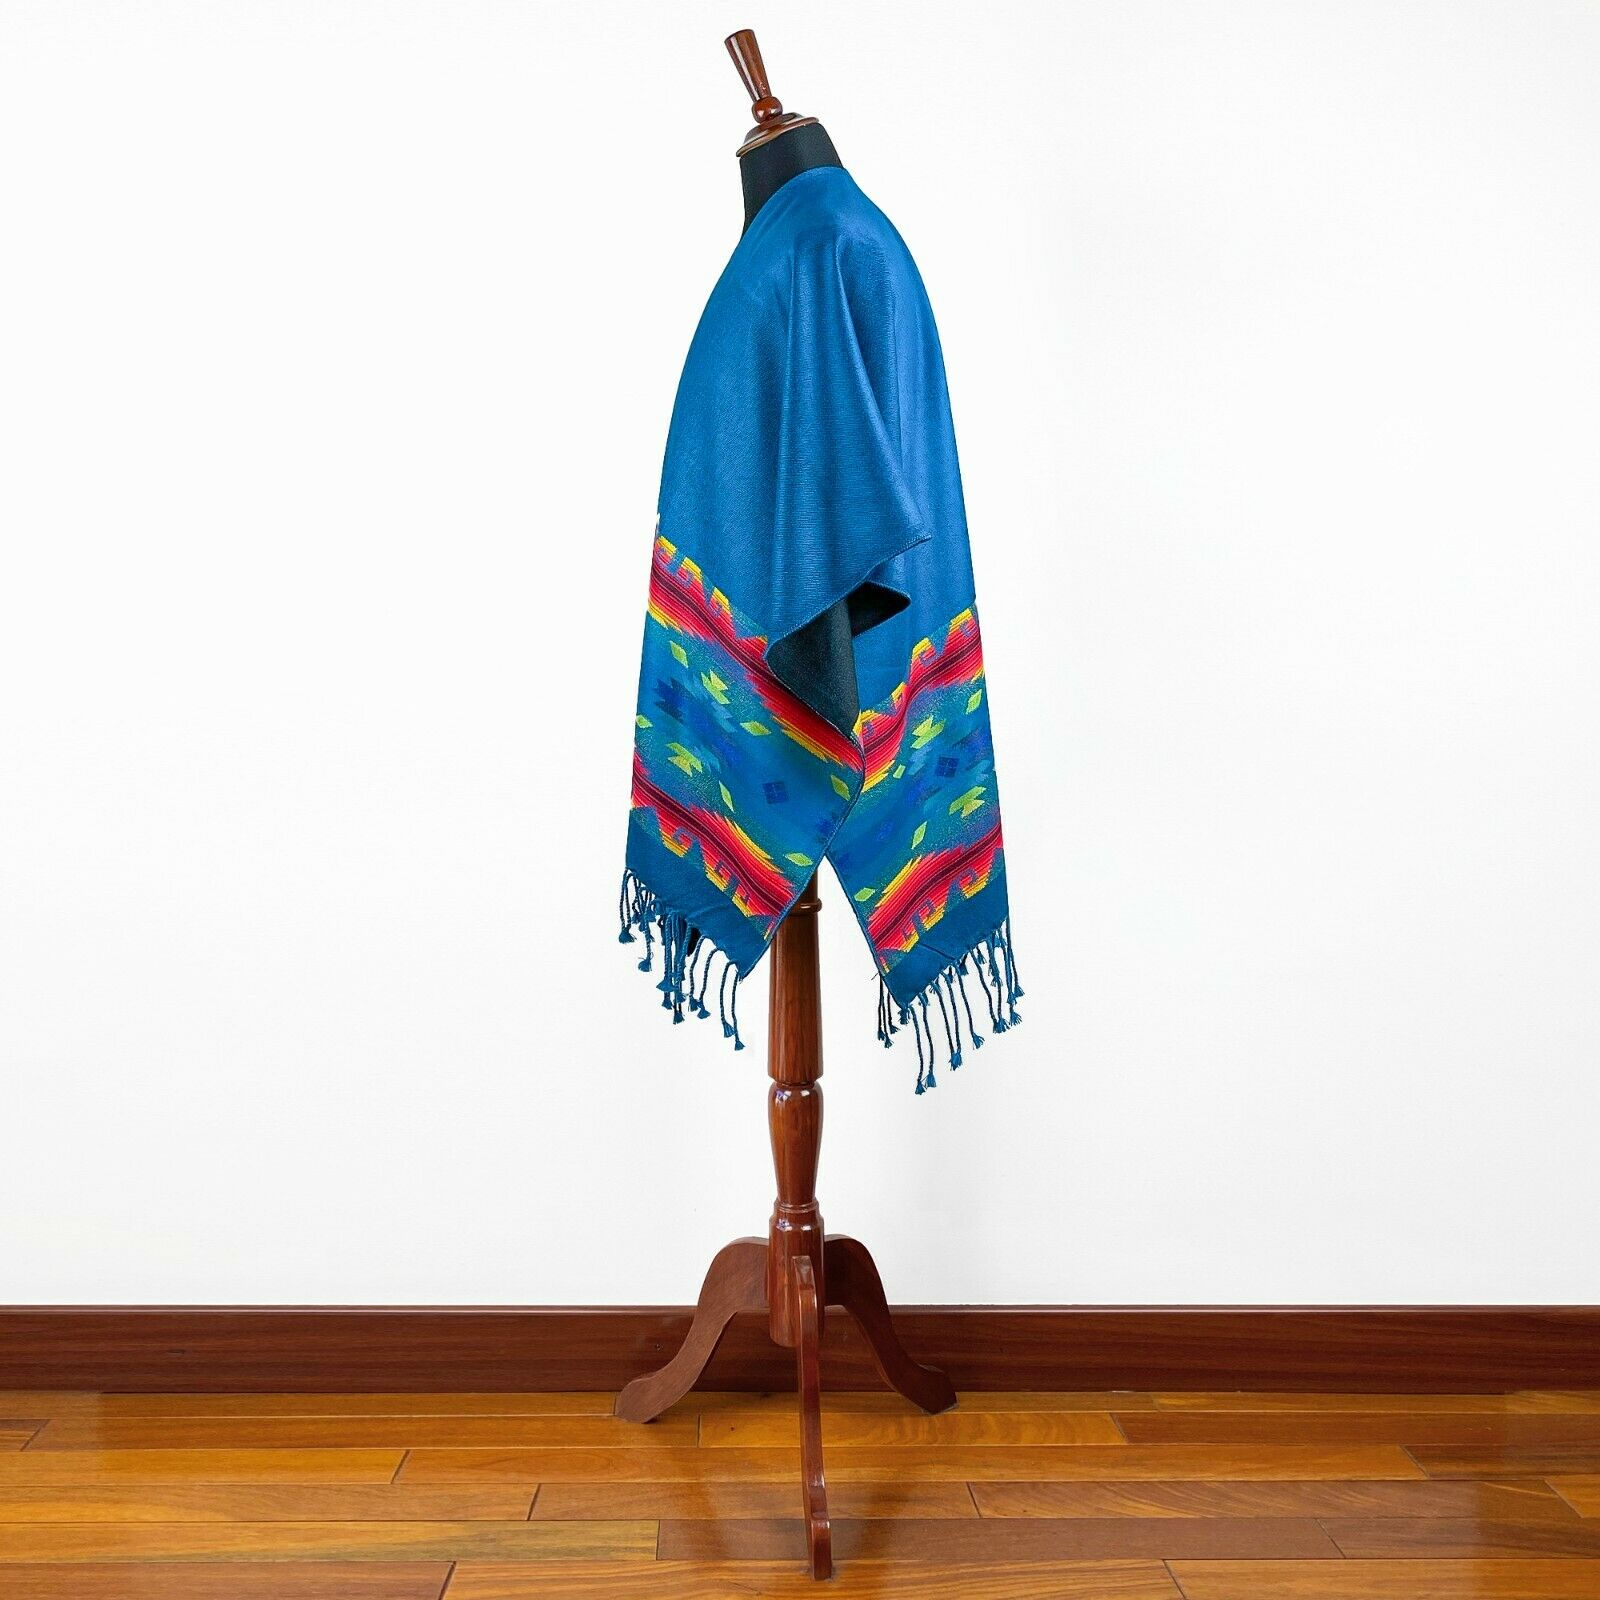 Lightweight Thin Alpaca Wool UNISEX Ruana Cape Poncho/Shawl - Blue with authentic pattern